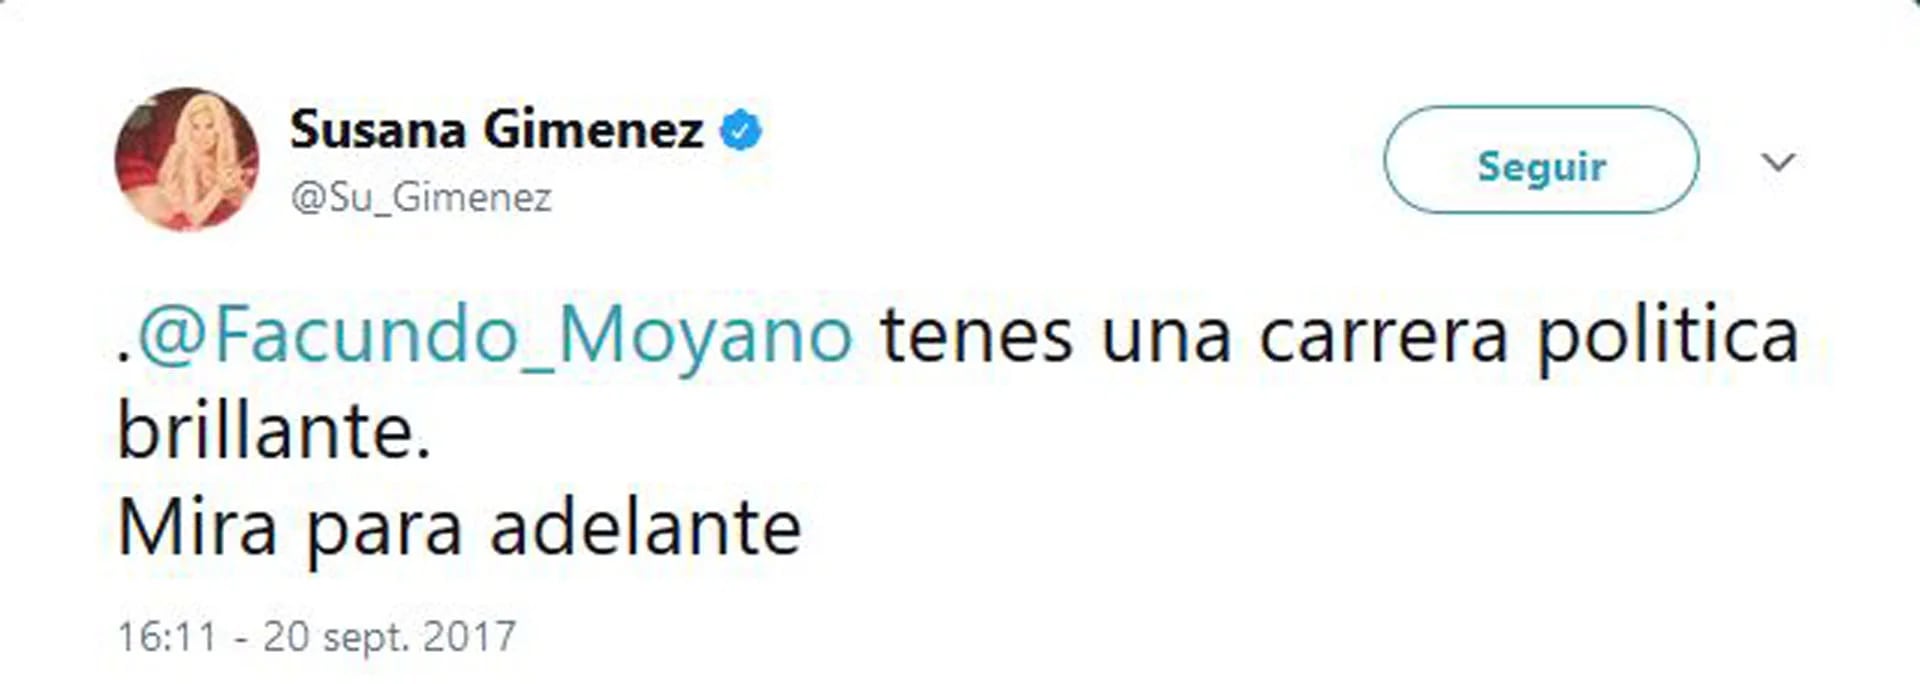 El mensaje de Susana Giménez para Facundo Moyano